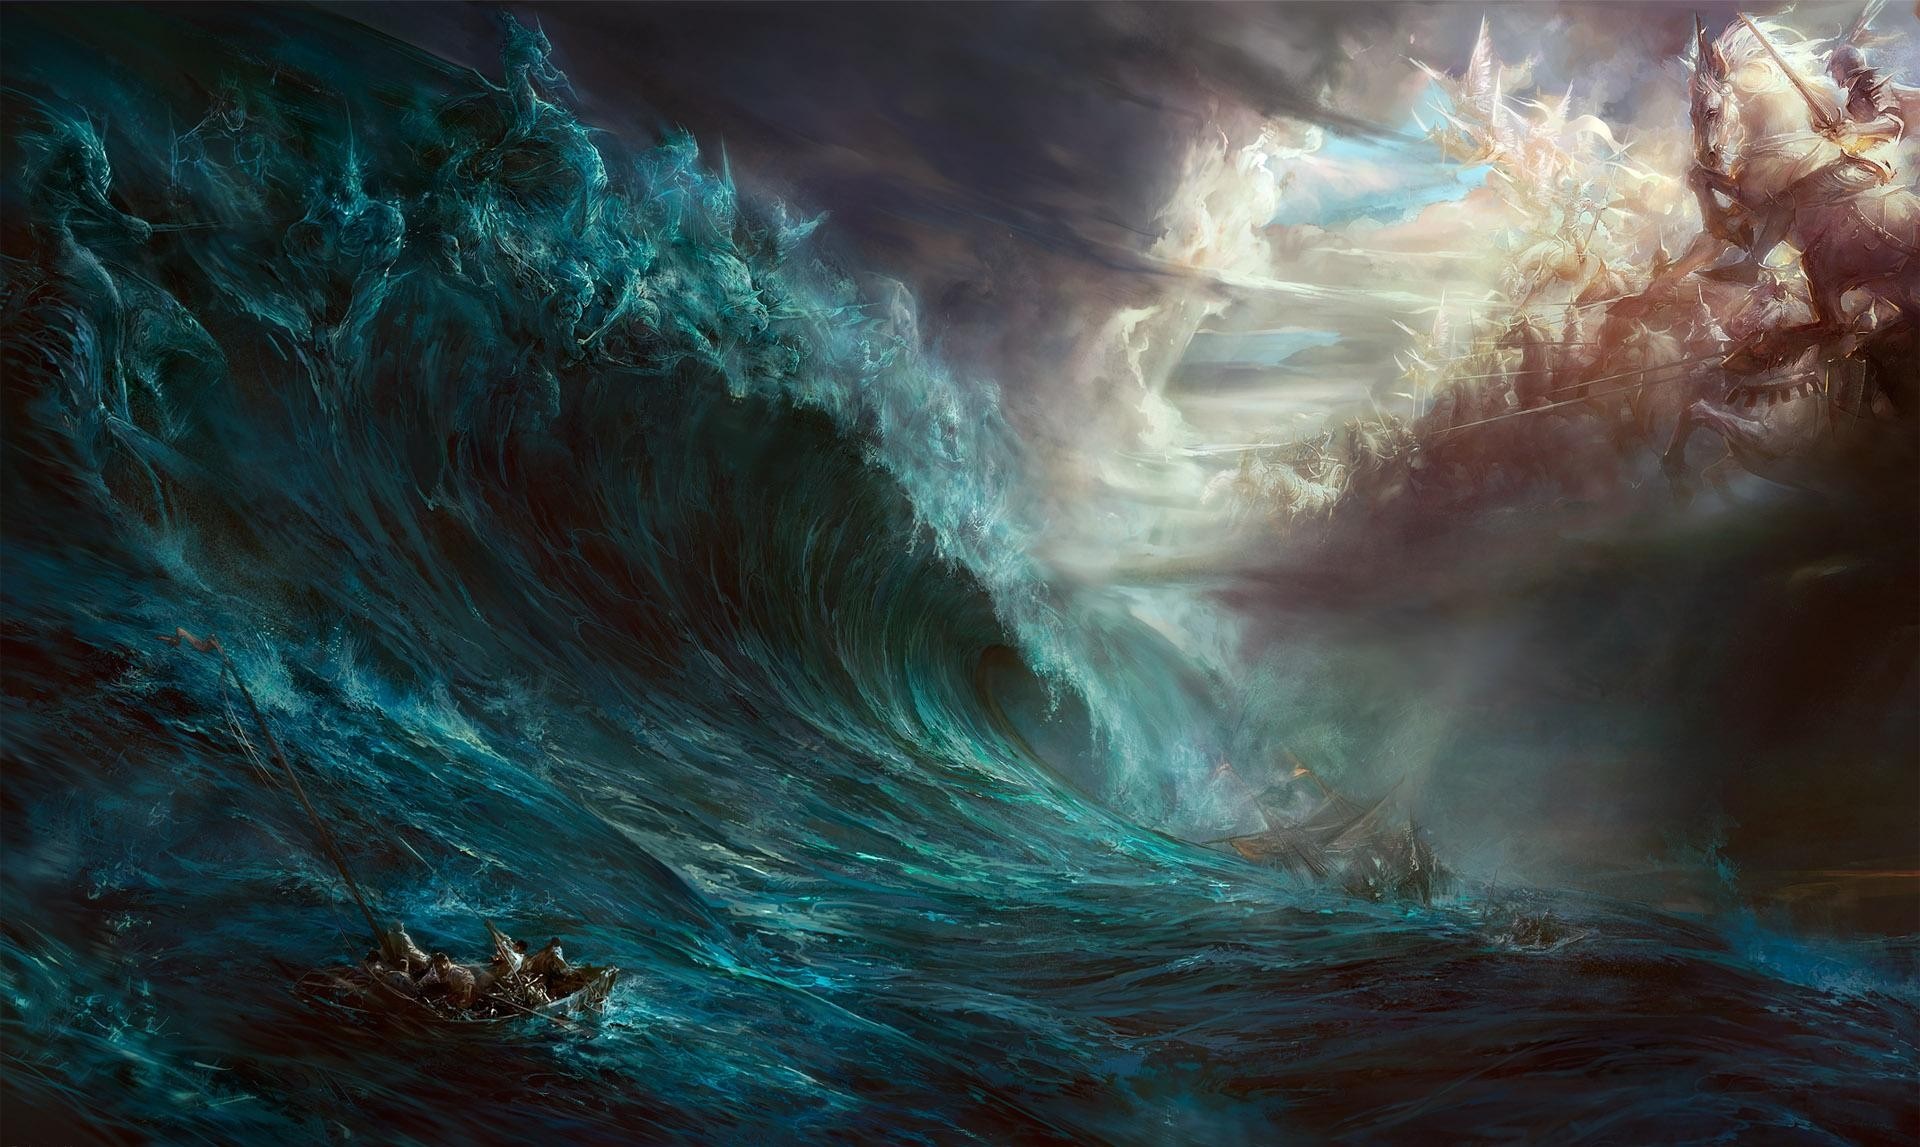 Boat fantasy art sea storm heaven hell ghost ship ocean wave screenshot puter wallpaper outer space wind wave